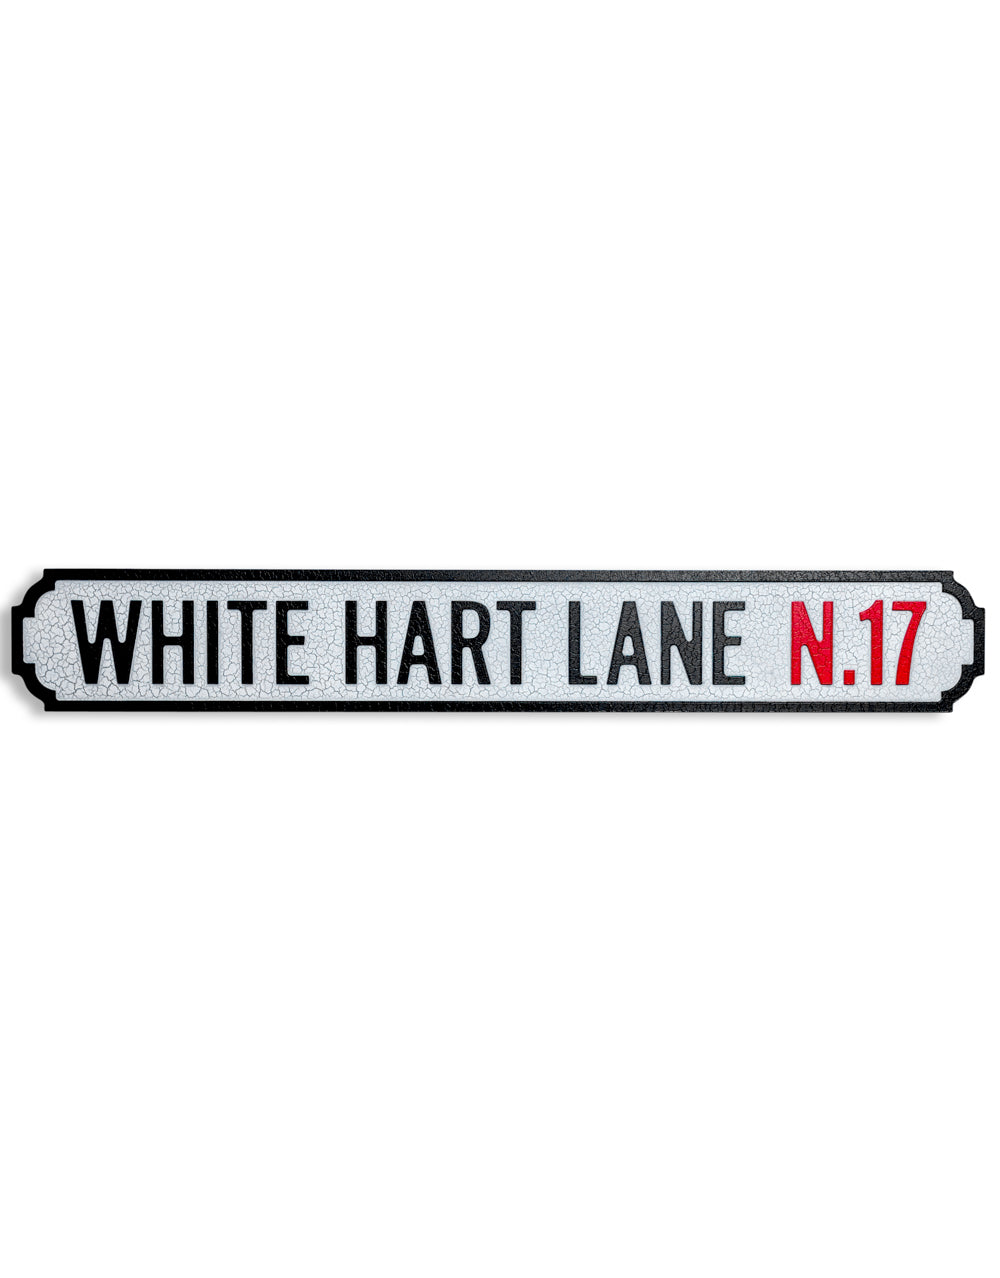 Antiqued Wooden "White Hart Lane N17" Road Sign